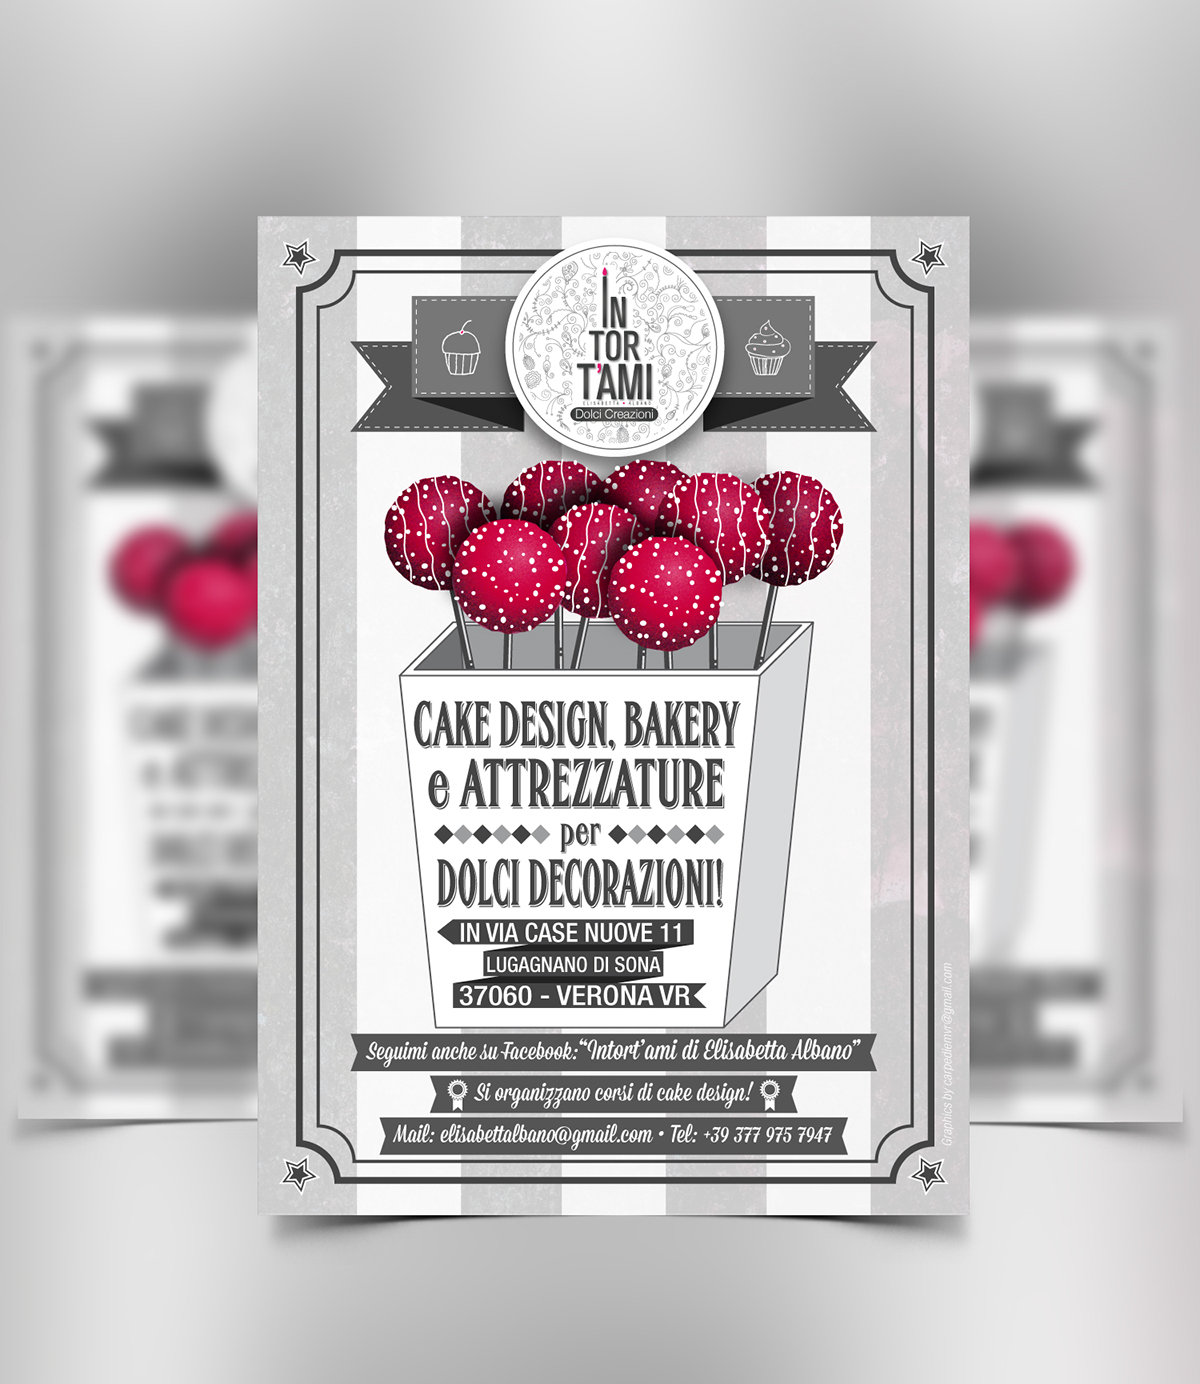 Intort'ami bakery cake design logo brand ADV flayer poster cupcake business card verona cake biglietti da visita dolci Bakery Italia